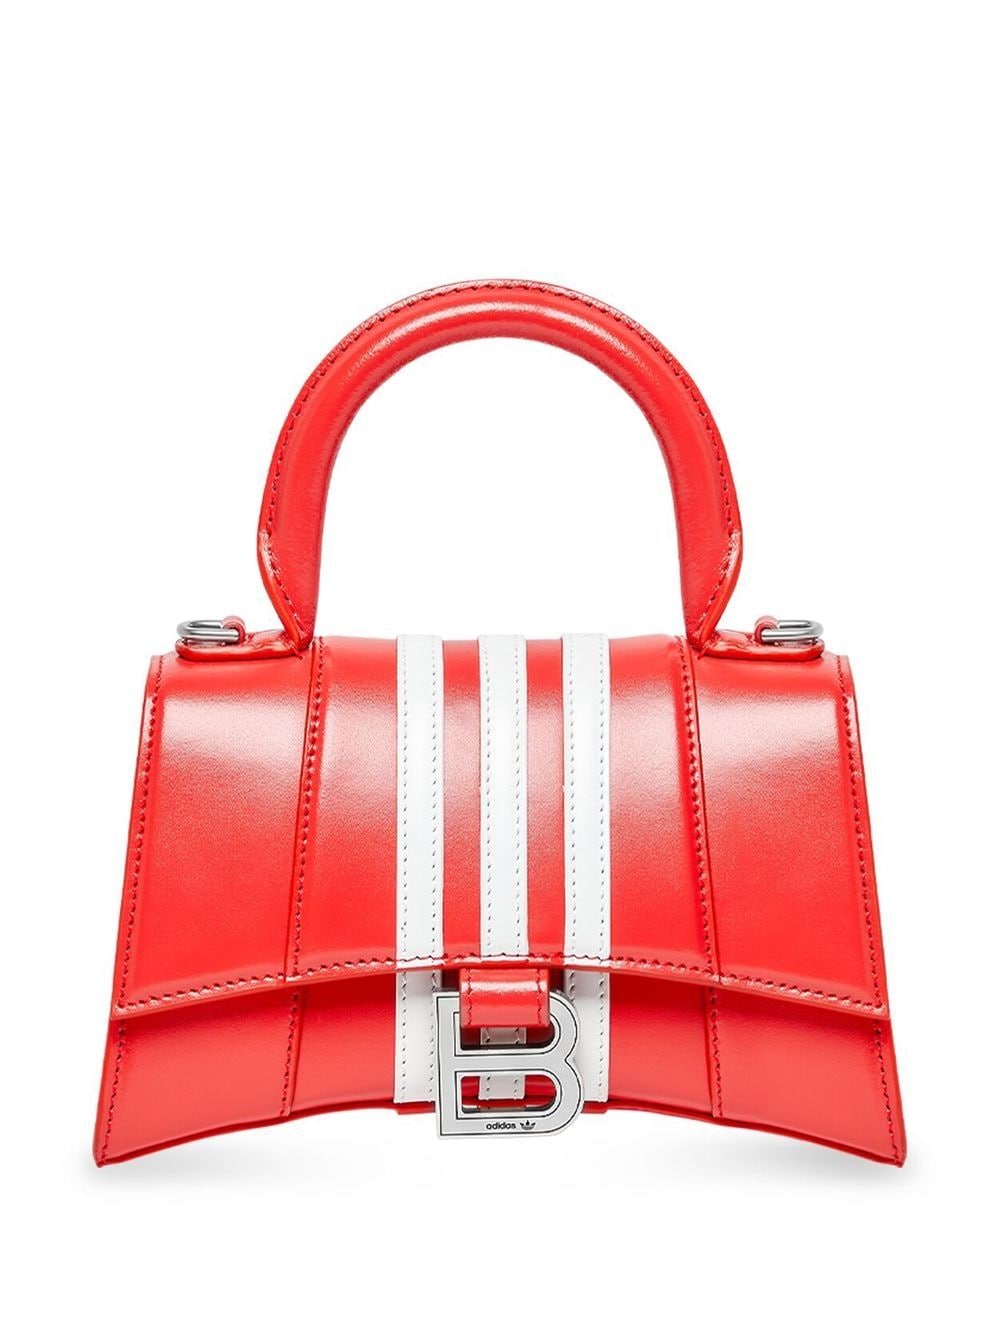 Balenciaga x adidas XS Hourglass mini bag - Red